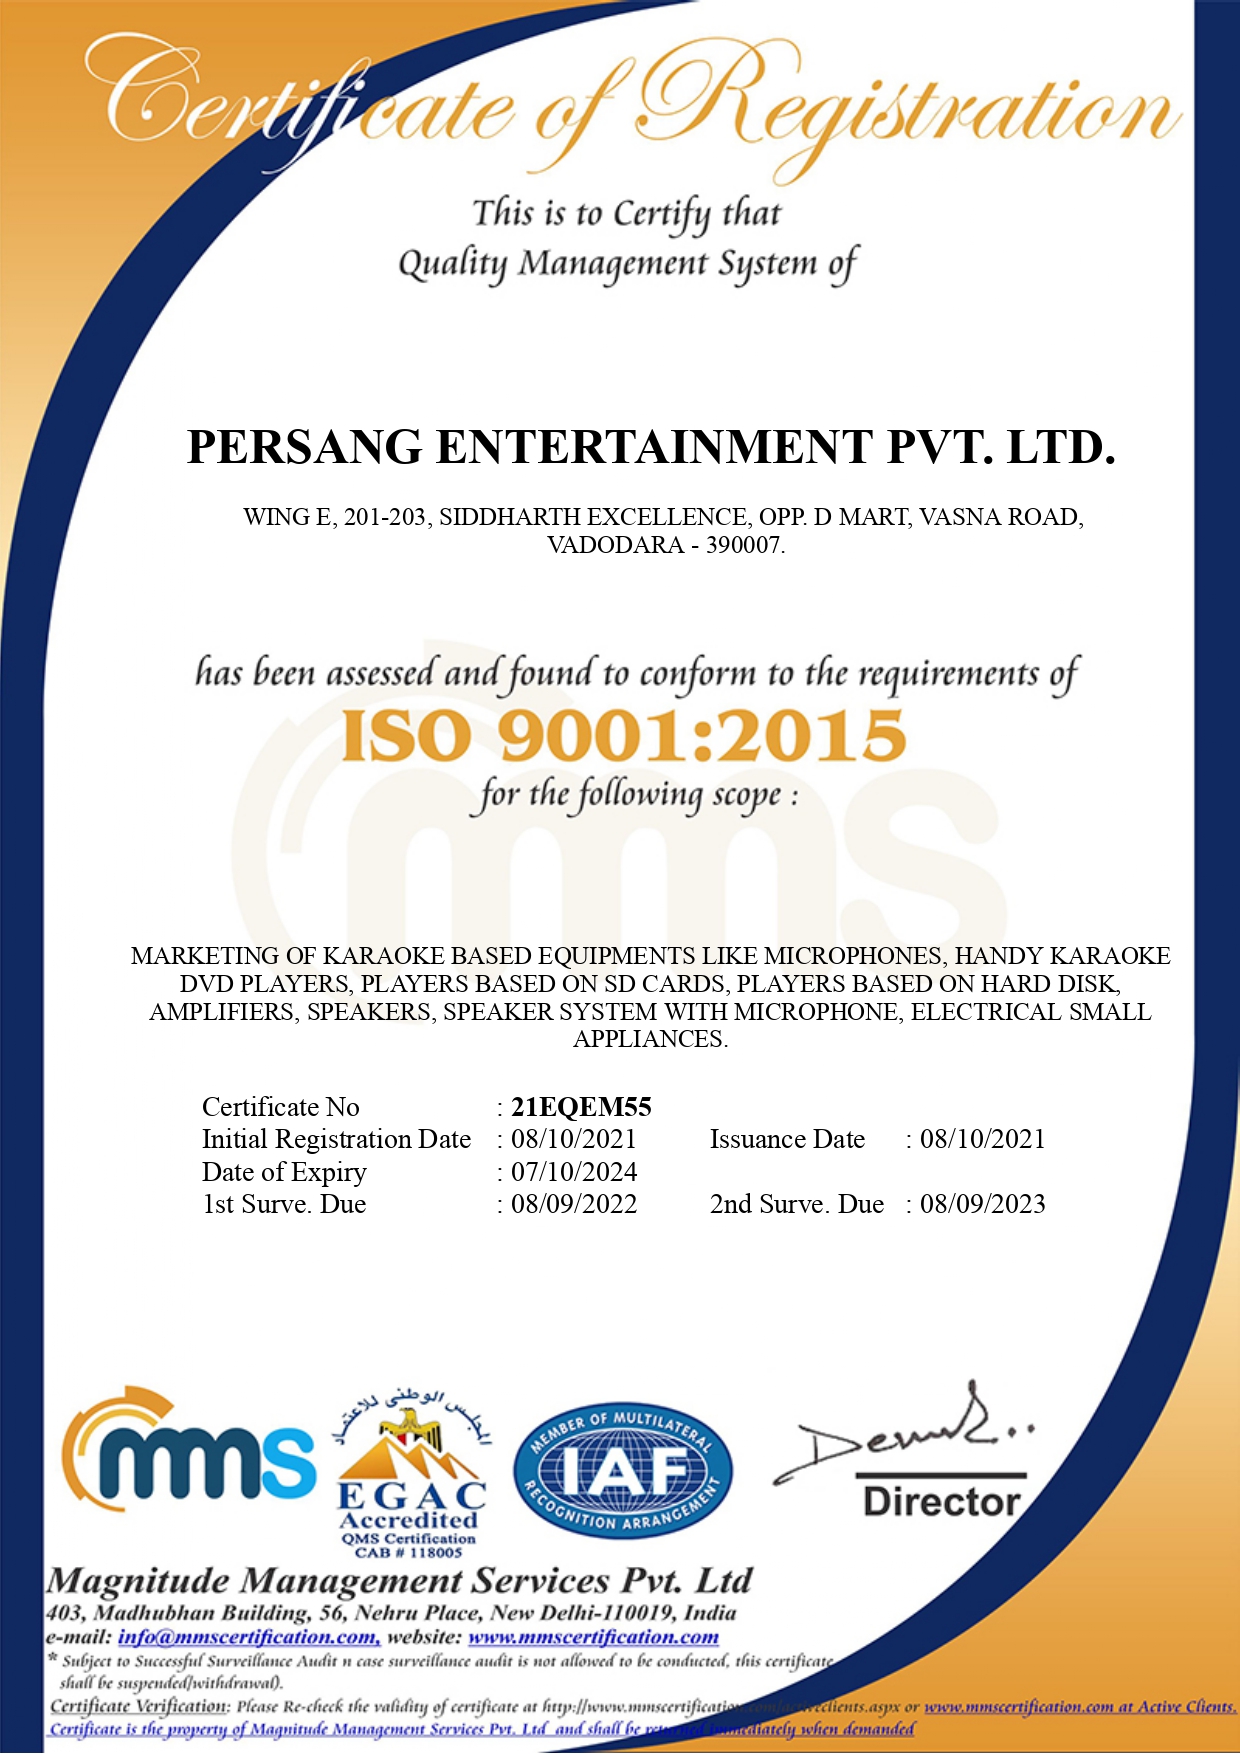 Persang Entertainment PVT. LTD